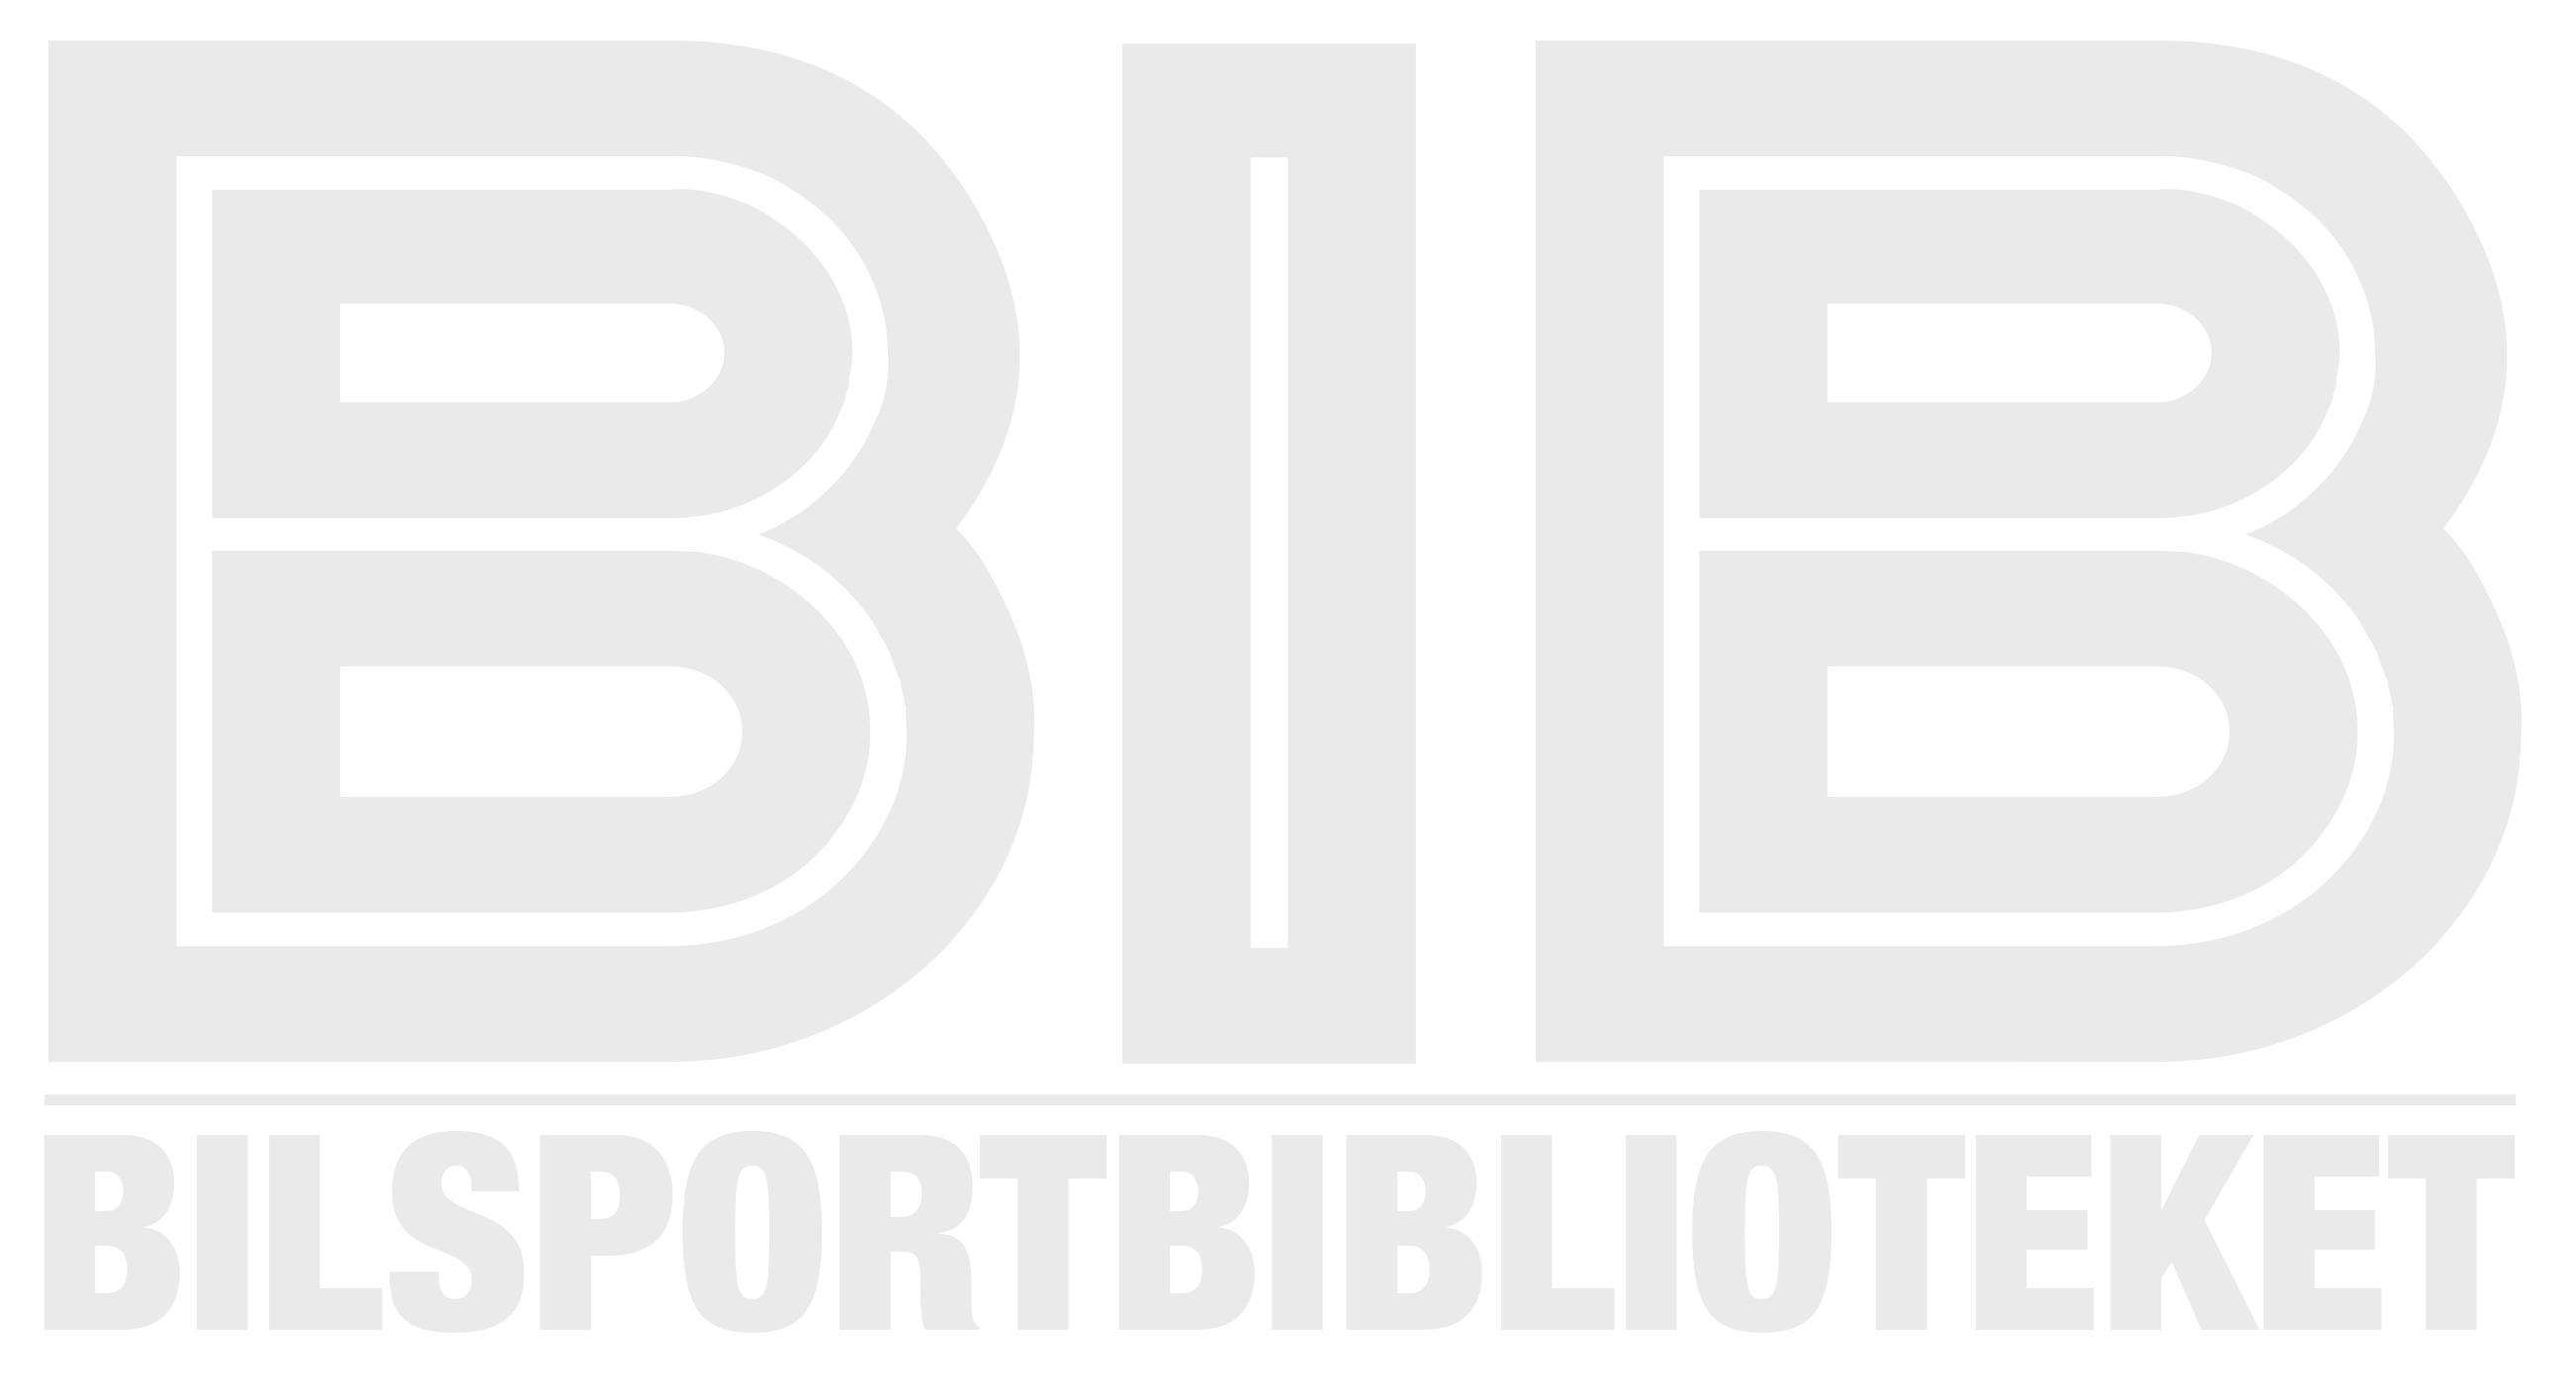 BILSPORTBIBLIOTEKET logo